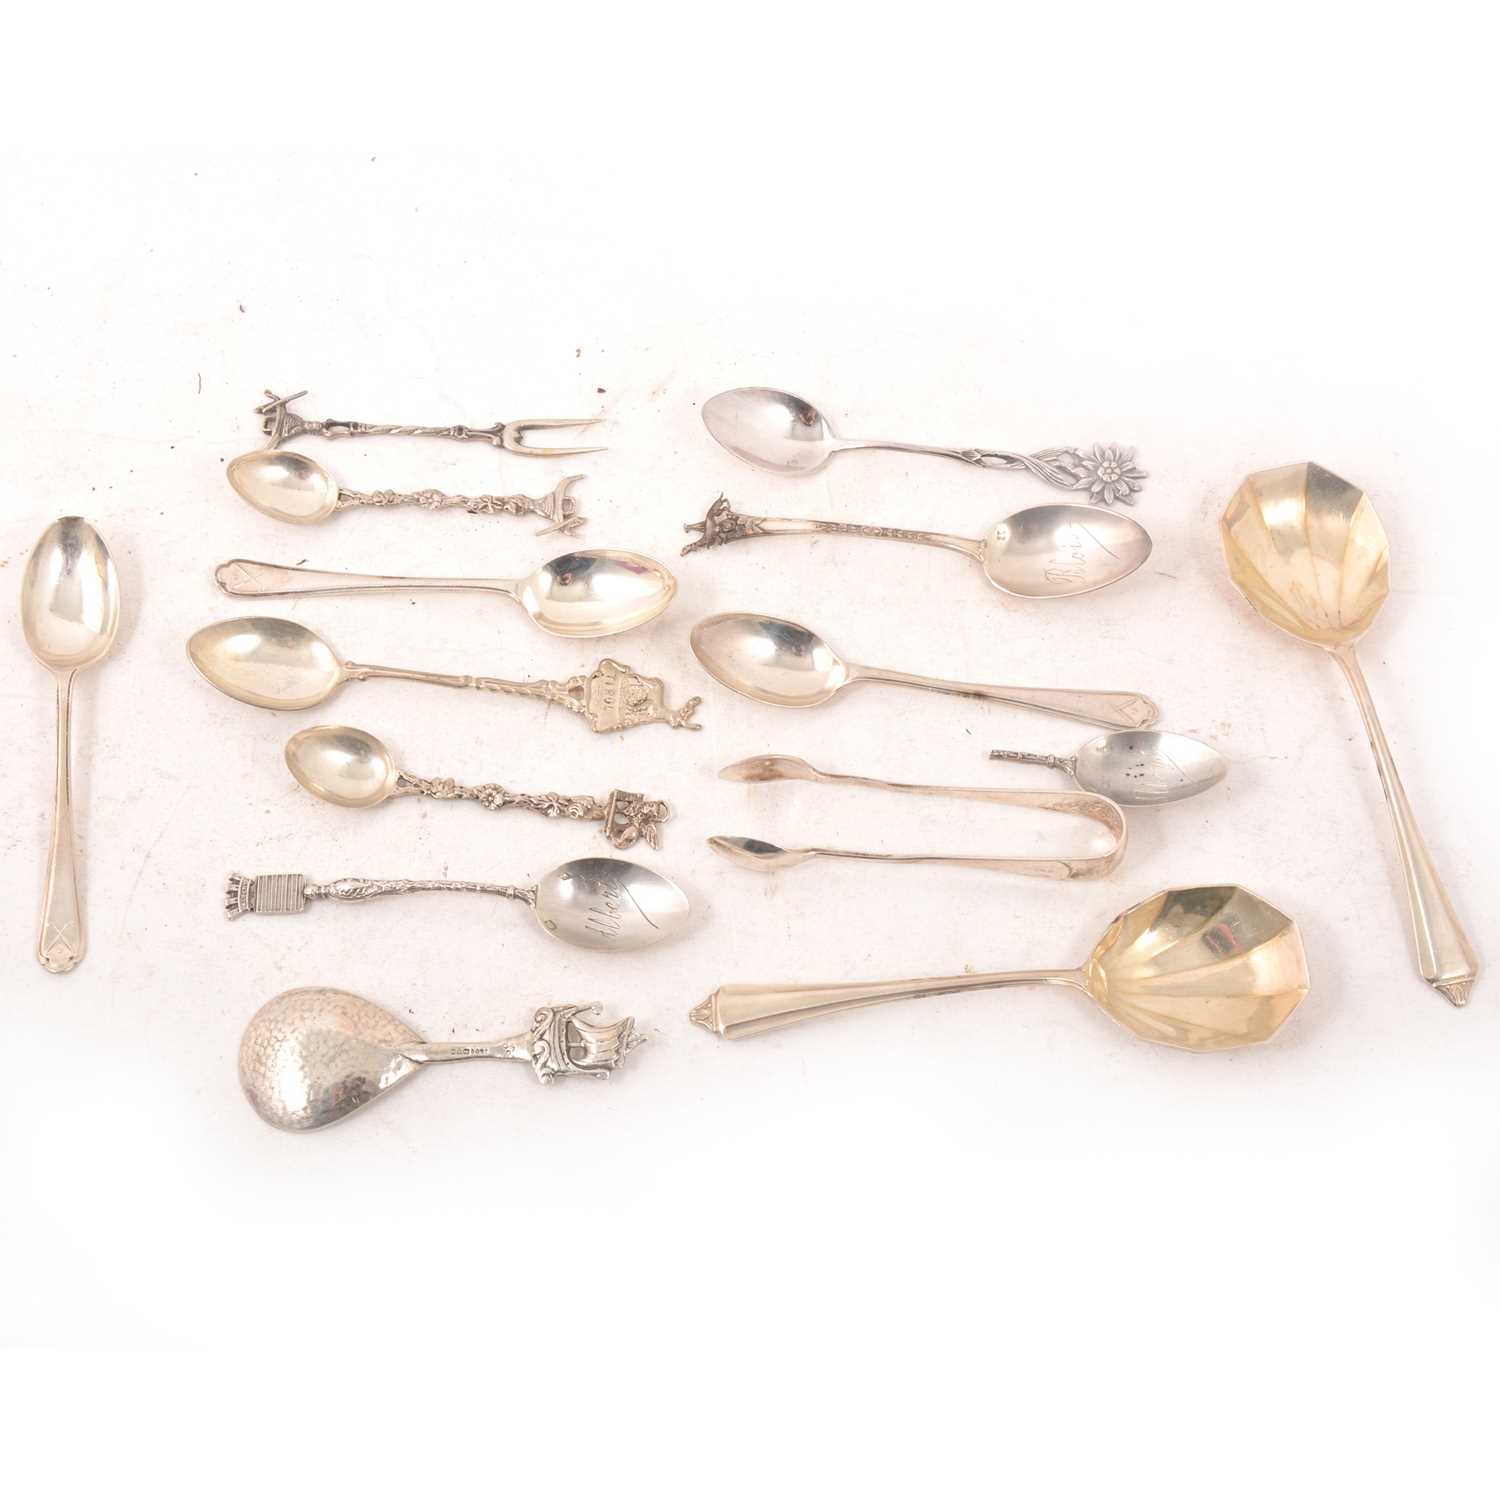 Lot 165 - Quantity of silver flatware, teaspoons, fruit spoons, souvenir spoons, golf interest.